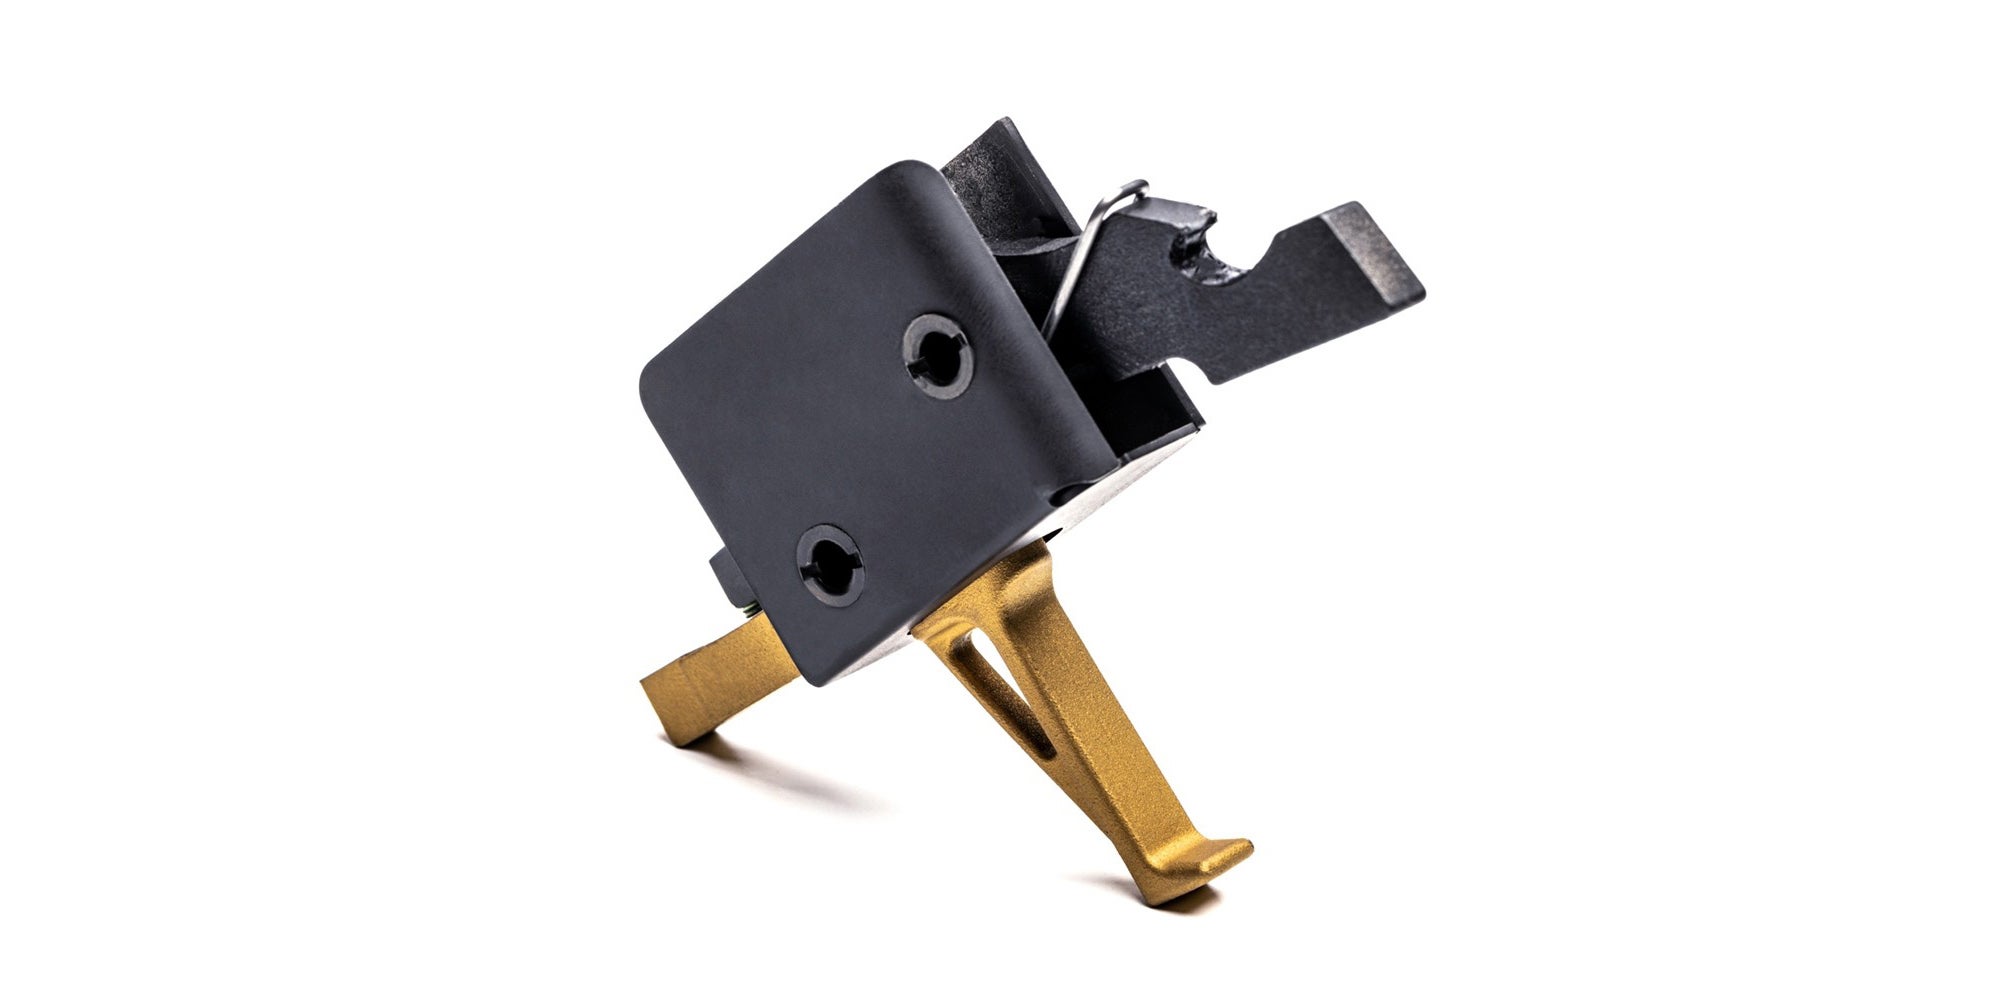 CMC Announces NEW Trigger – Goldfinger – for the AR15 Platform